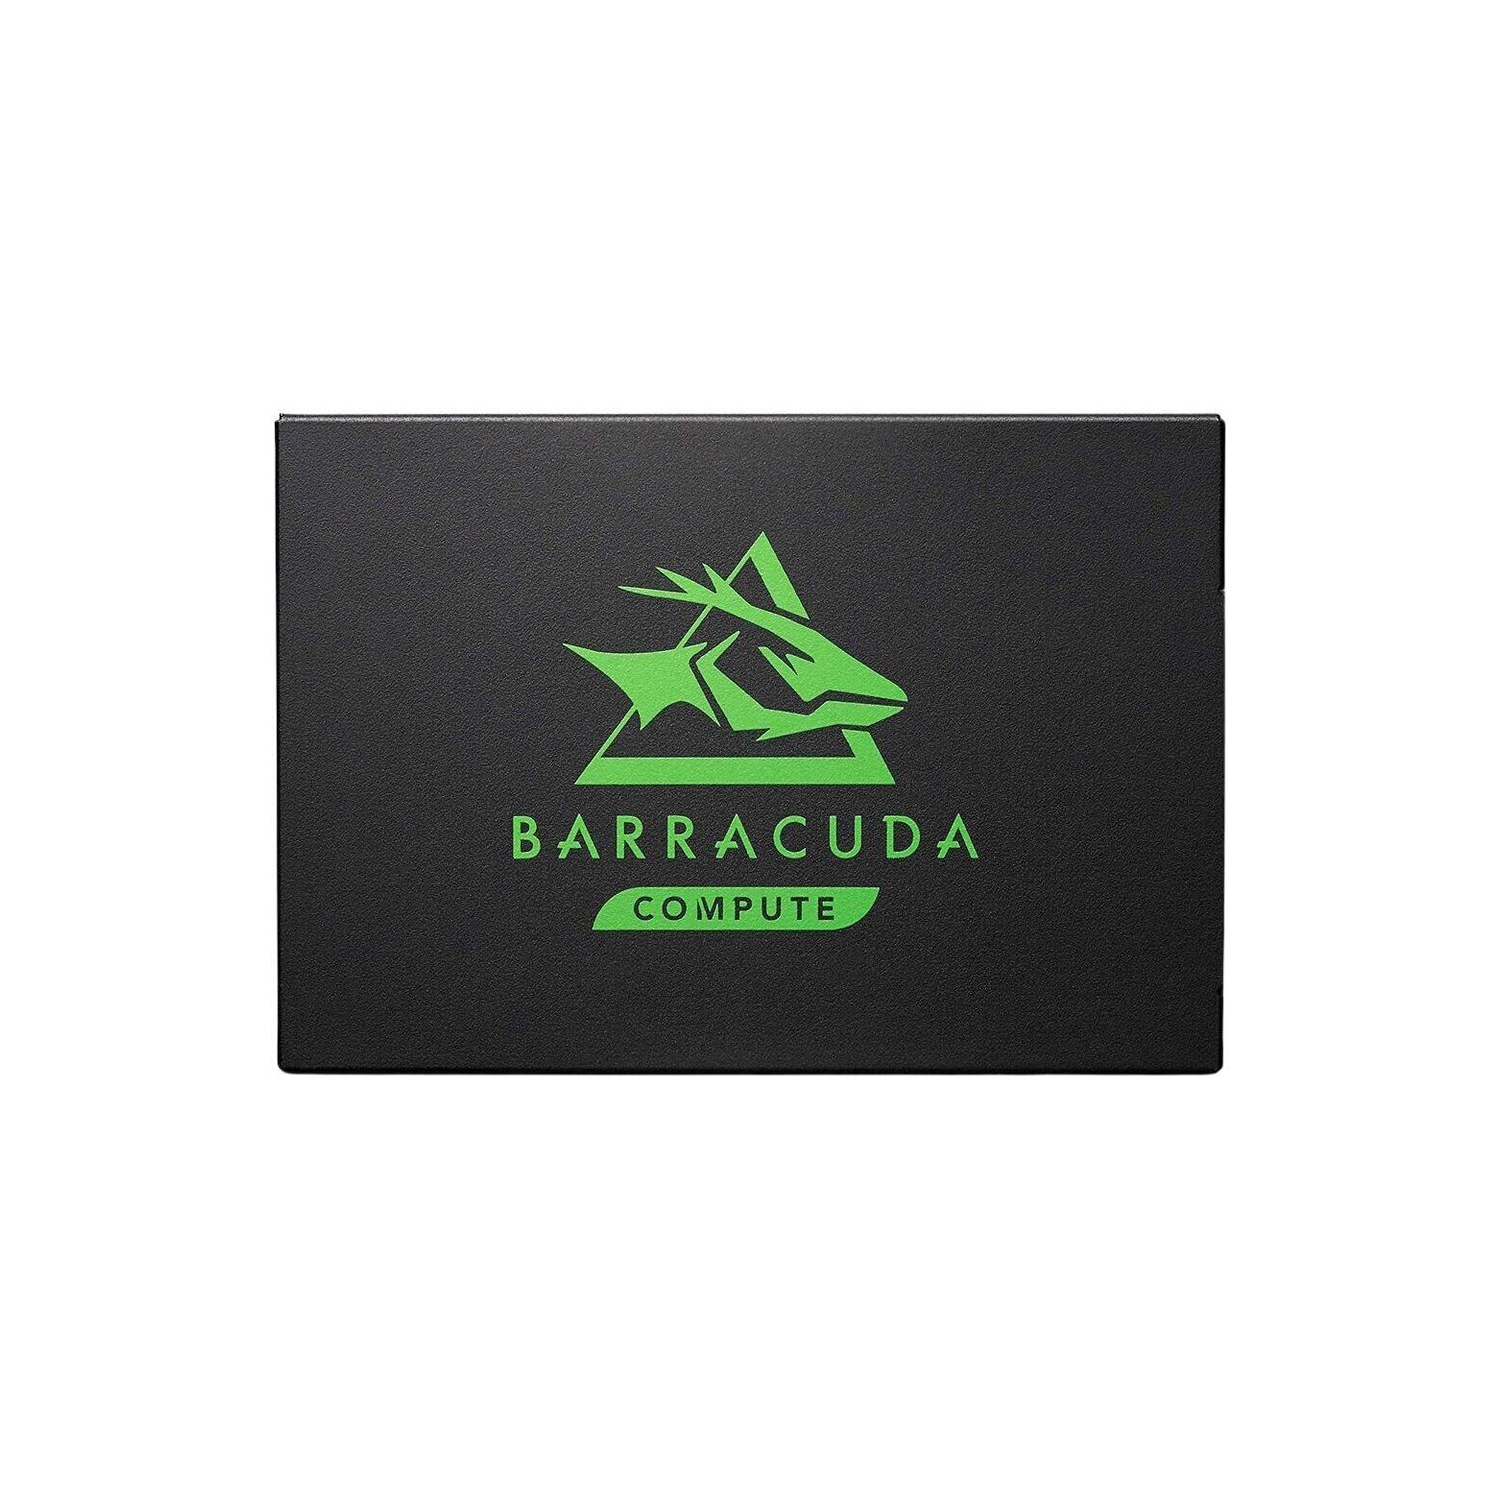 Refurbished (Good) - Seagate Barracuda 120 1TB 2.5 SATA 7mm Solid State Drive SSD ZA1000CM10003, Certified Refurbished